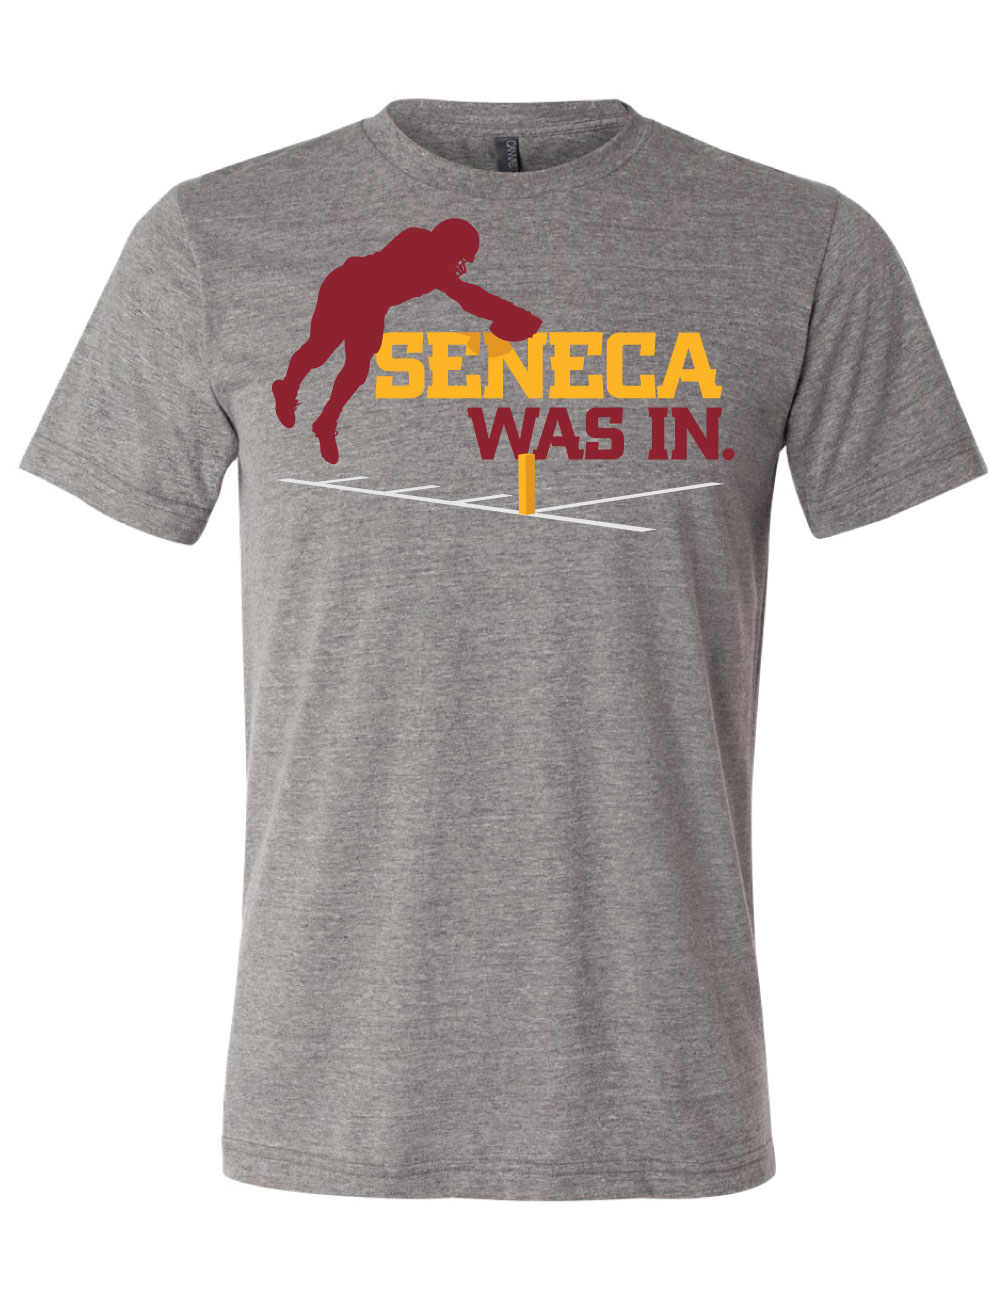 Seneca+Was+In%21+Shirt.JPG